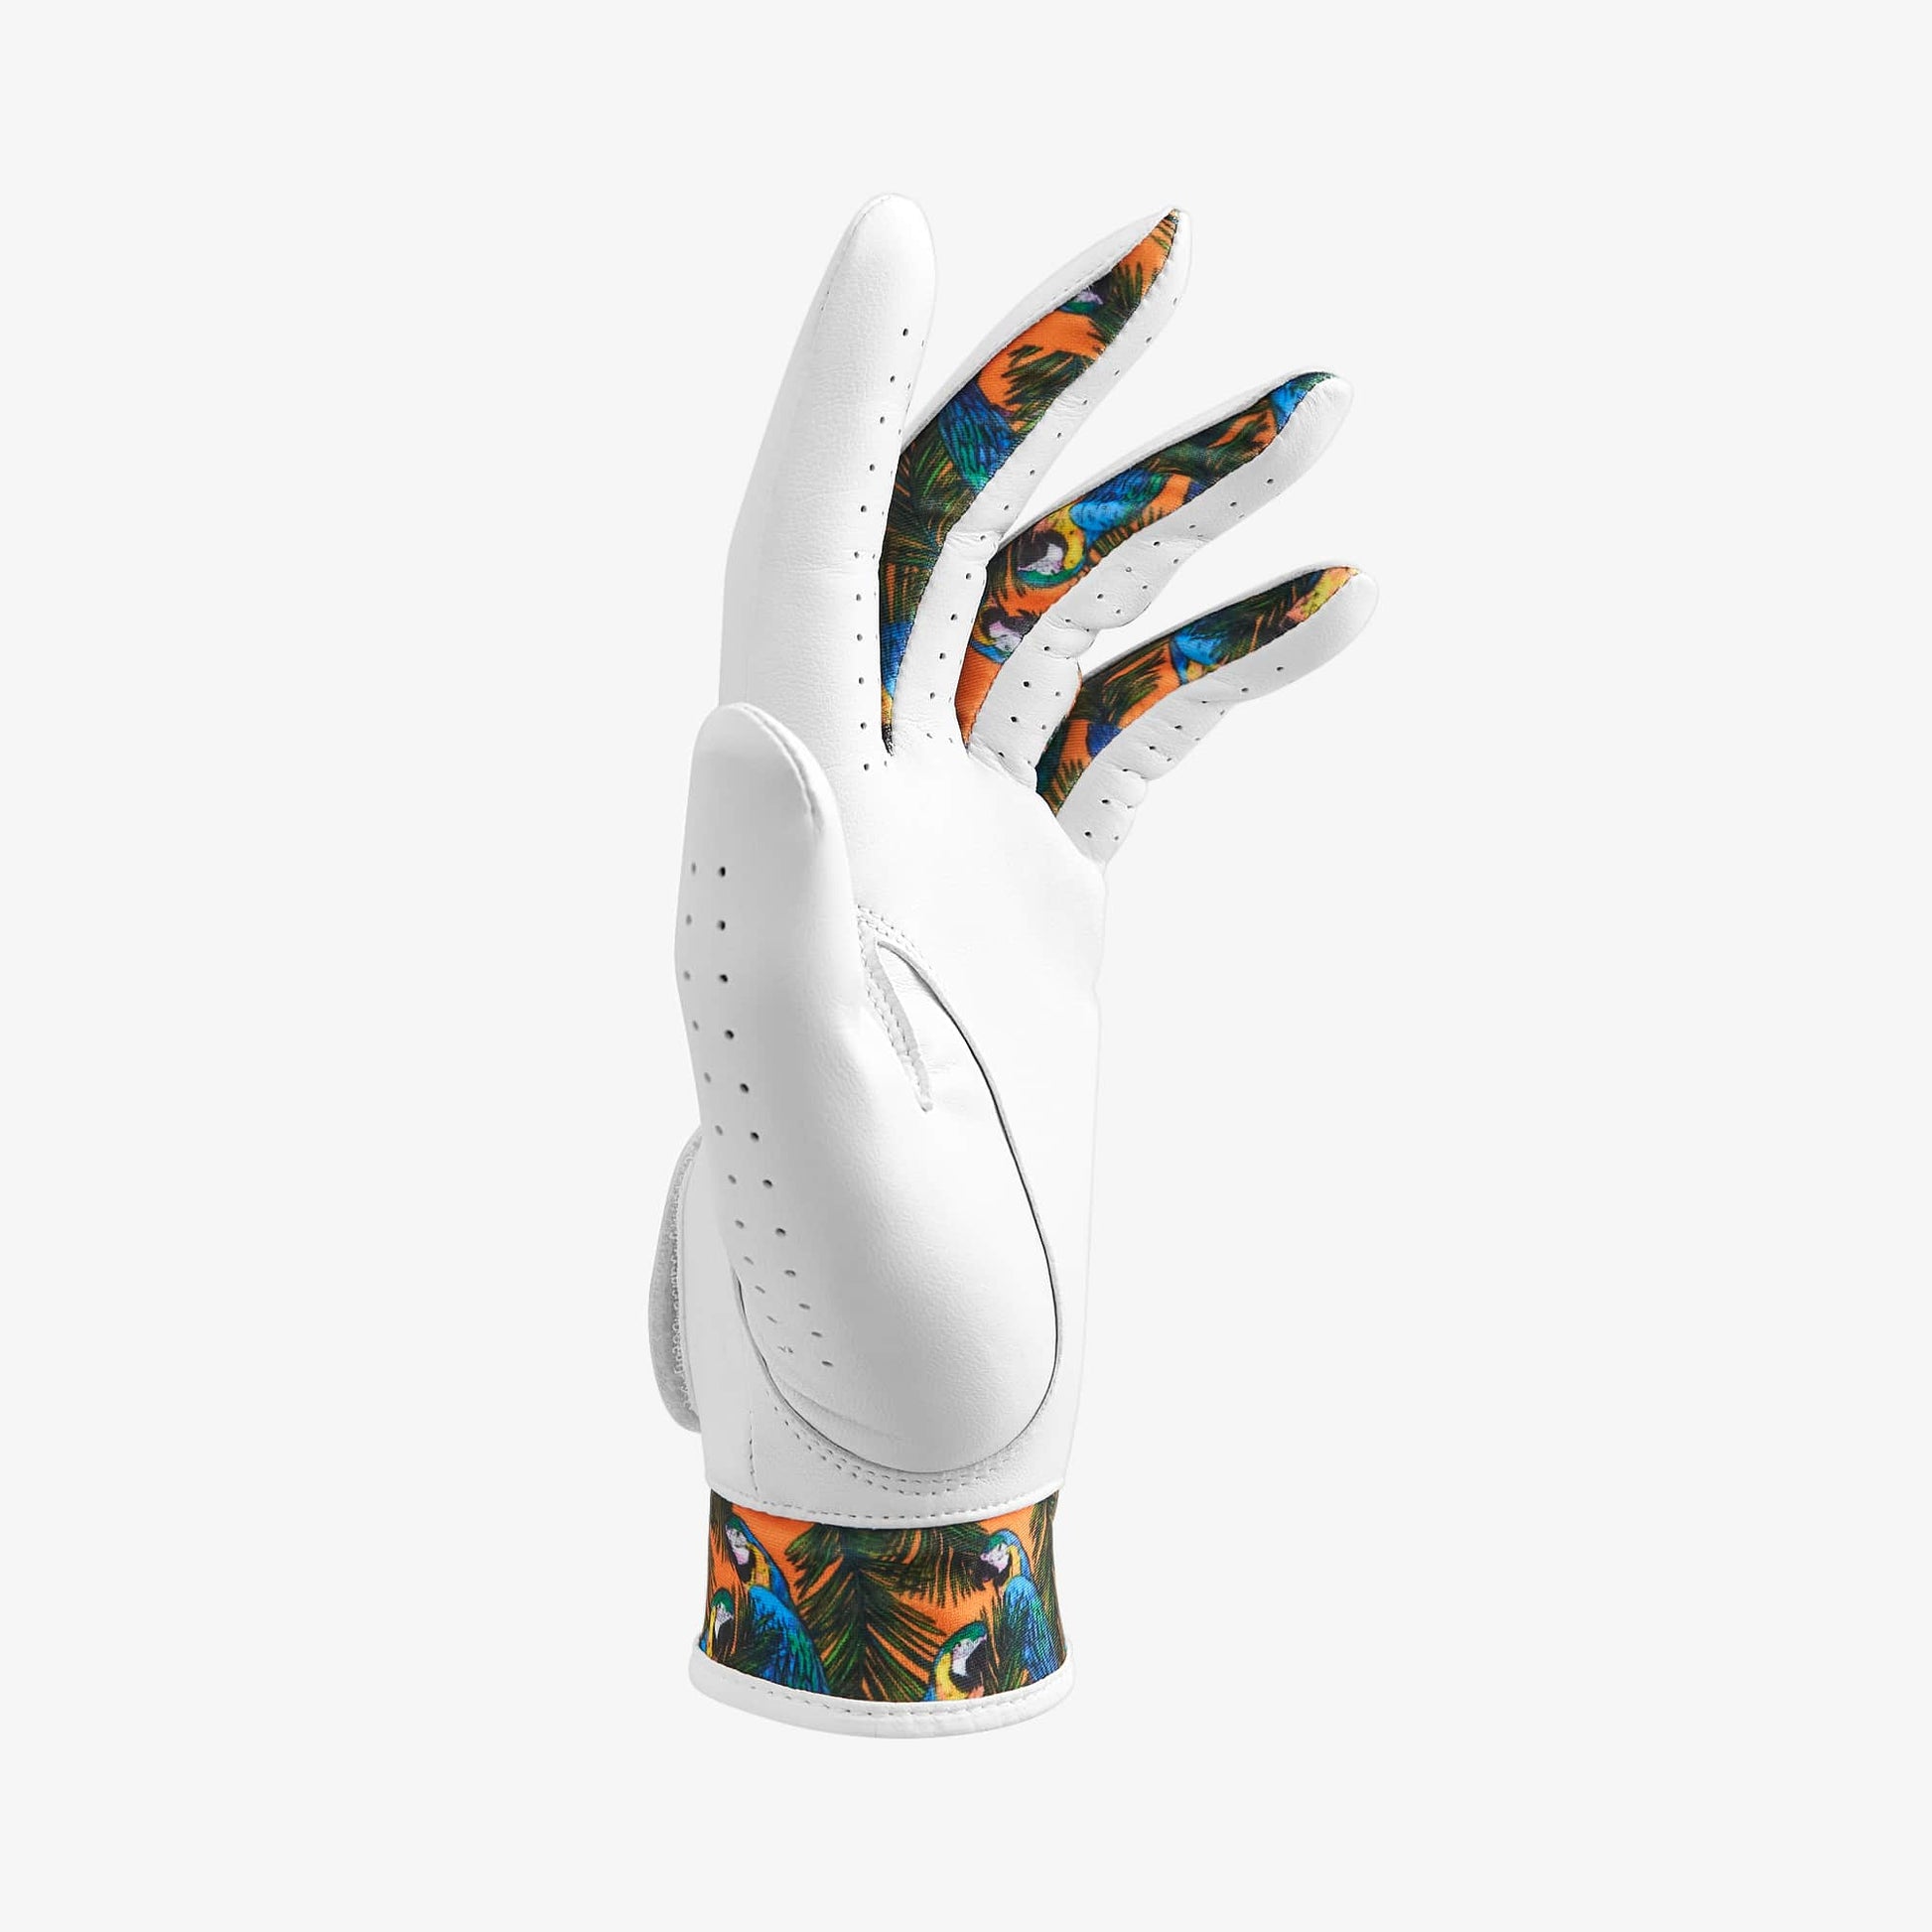 Fun golf glove with cool design